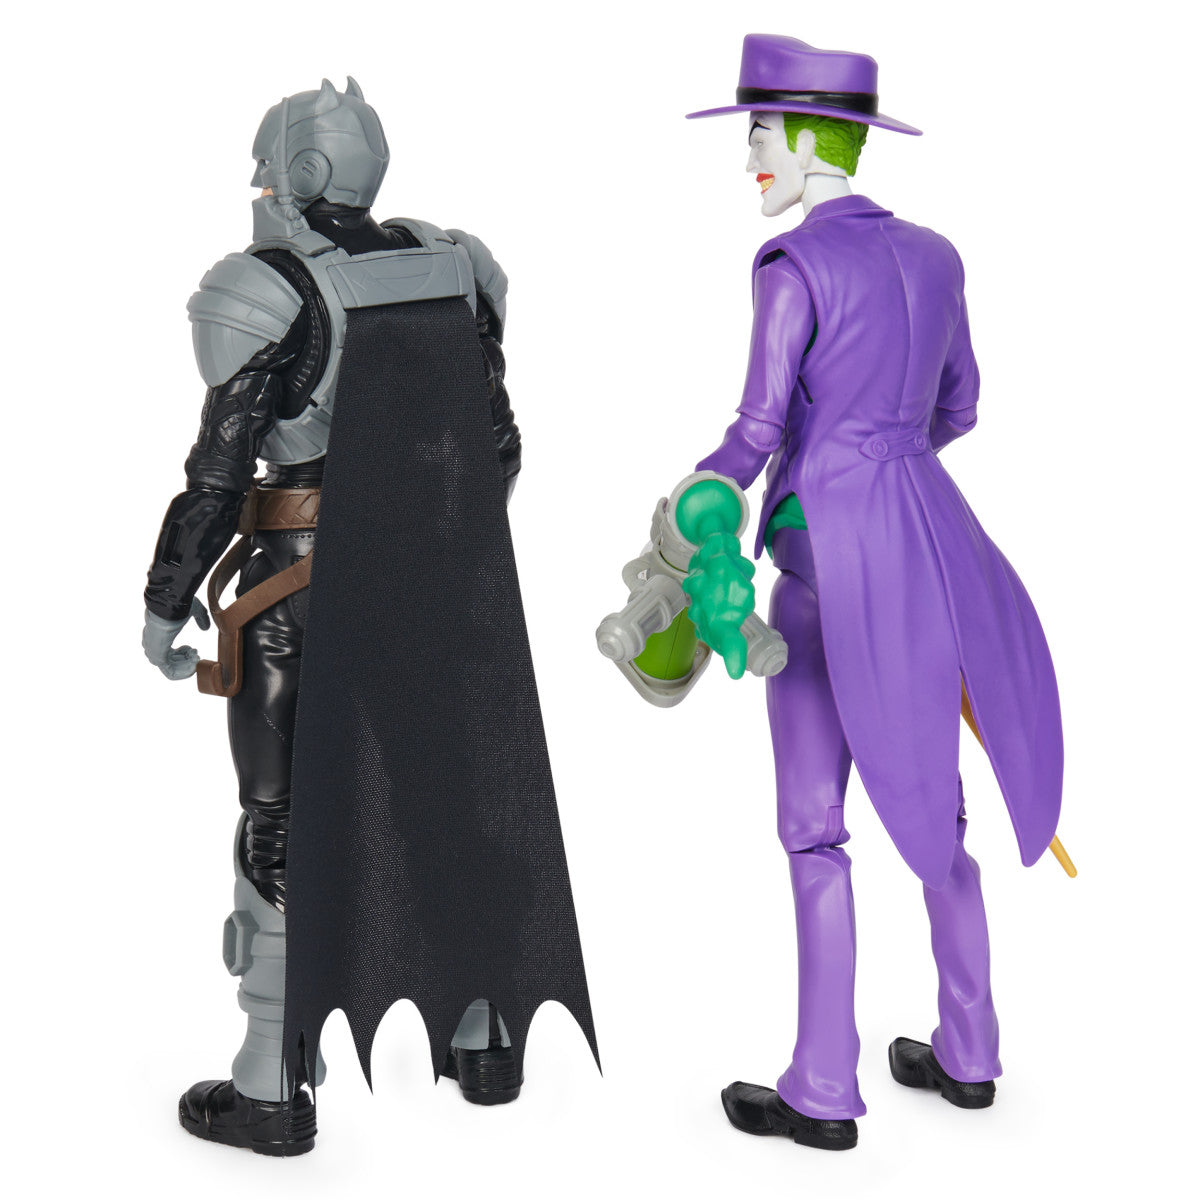 Batman: DC - Batman Vs Joker Figura 12 Pulgadas 2 Pack